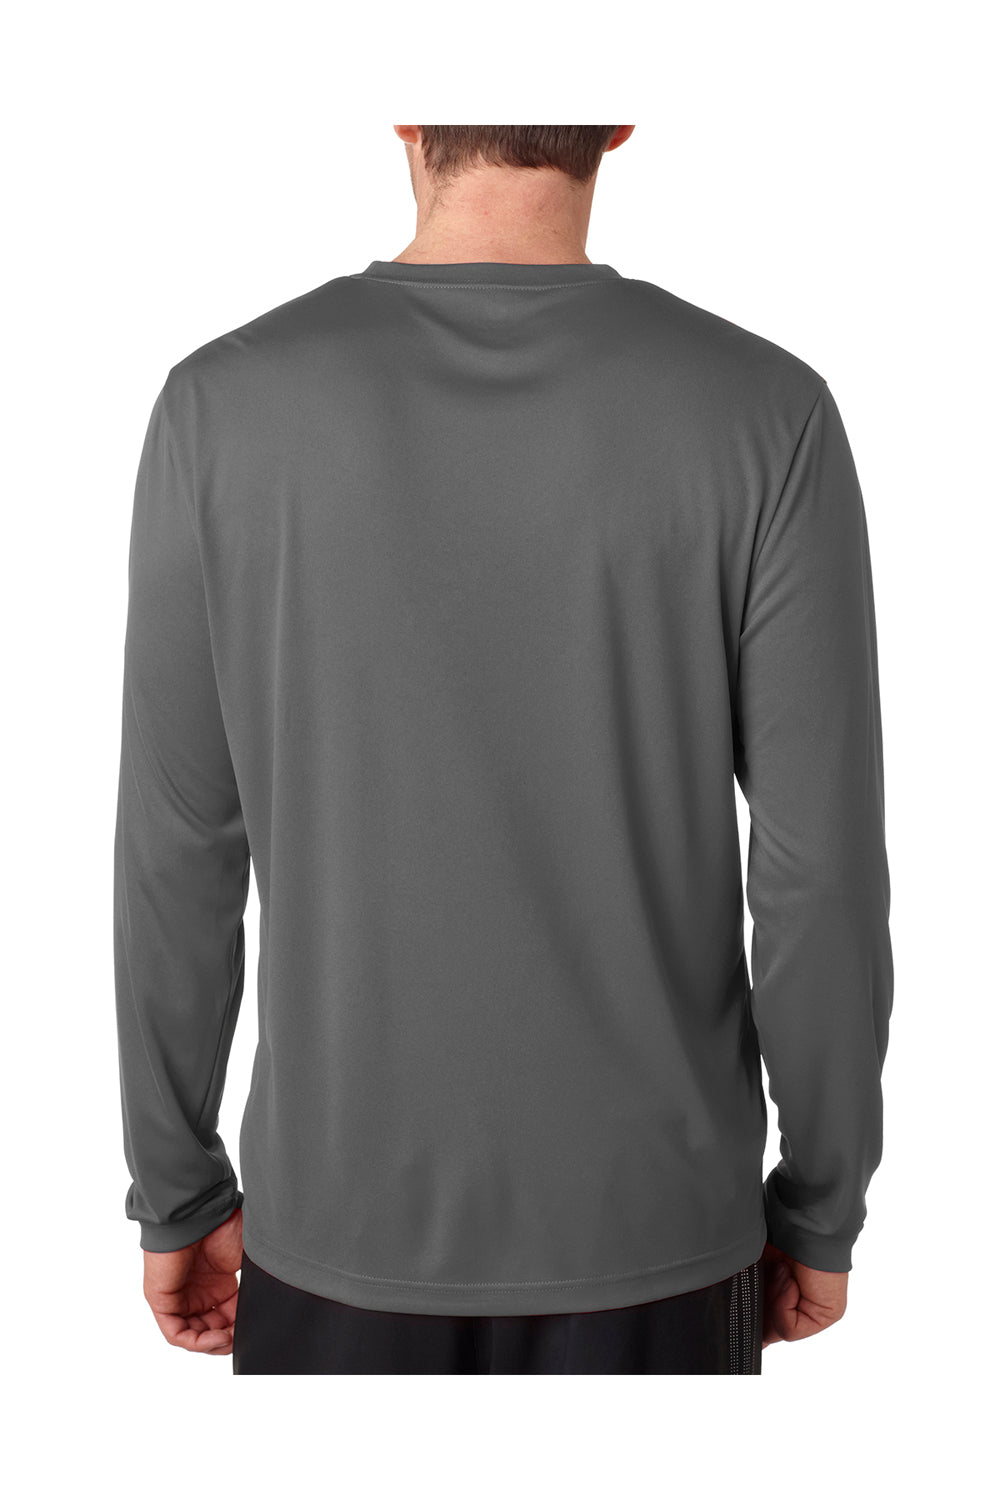 Hanes 482L Mens Cool DRI FreshIQ Moisture Wicking Long Sleeve Crewneck T-Shirt Graphite Grey Back